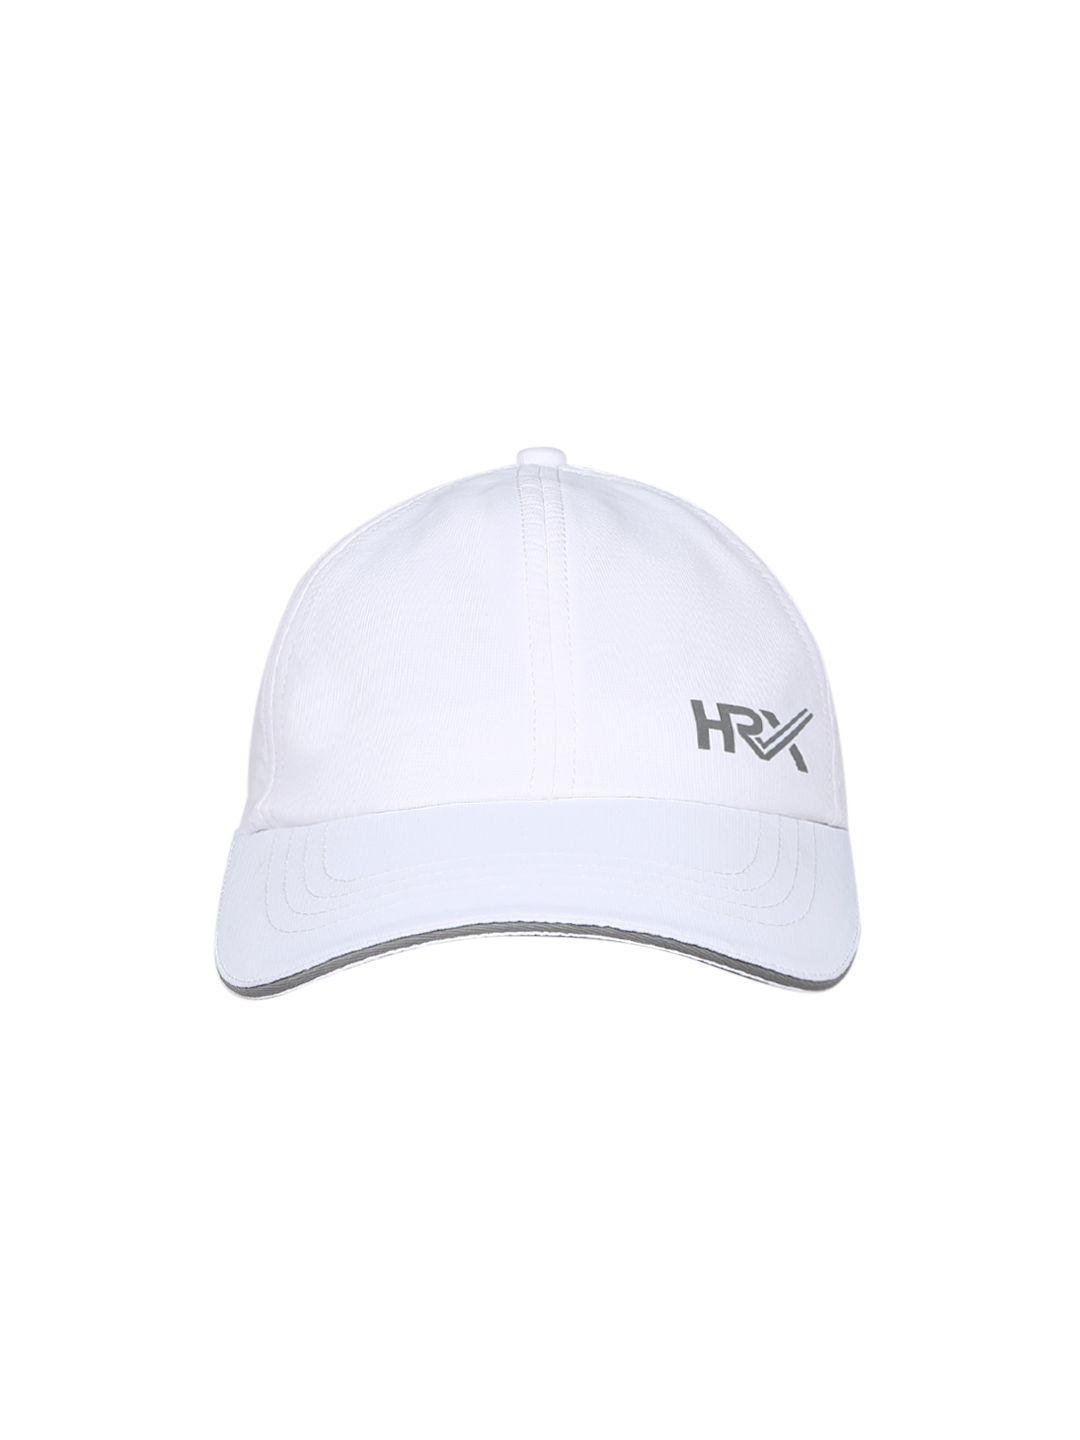 hrx-by-hrithik-roshan-men-white-solid-lifestyle-cap